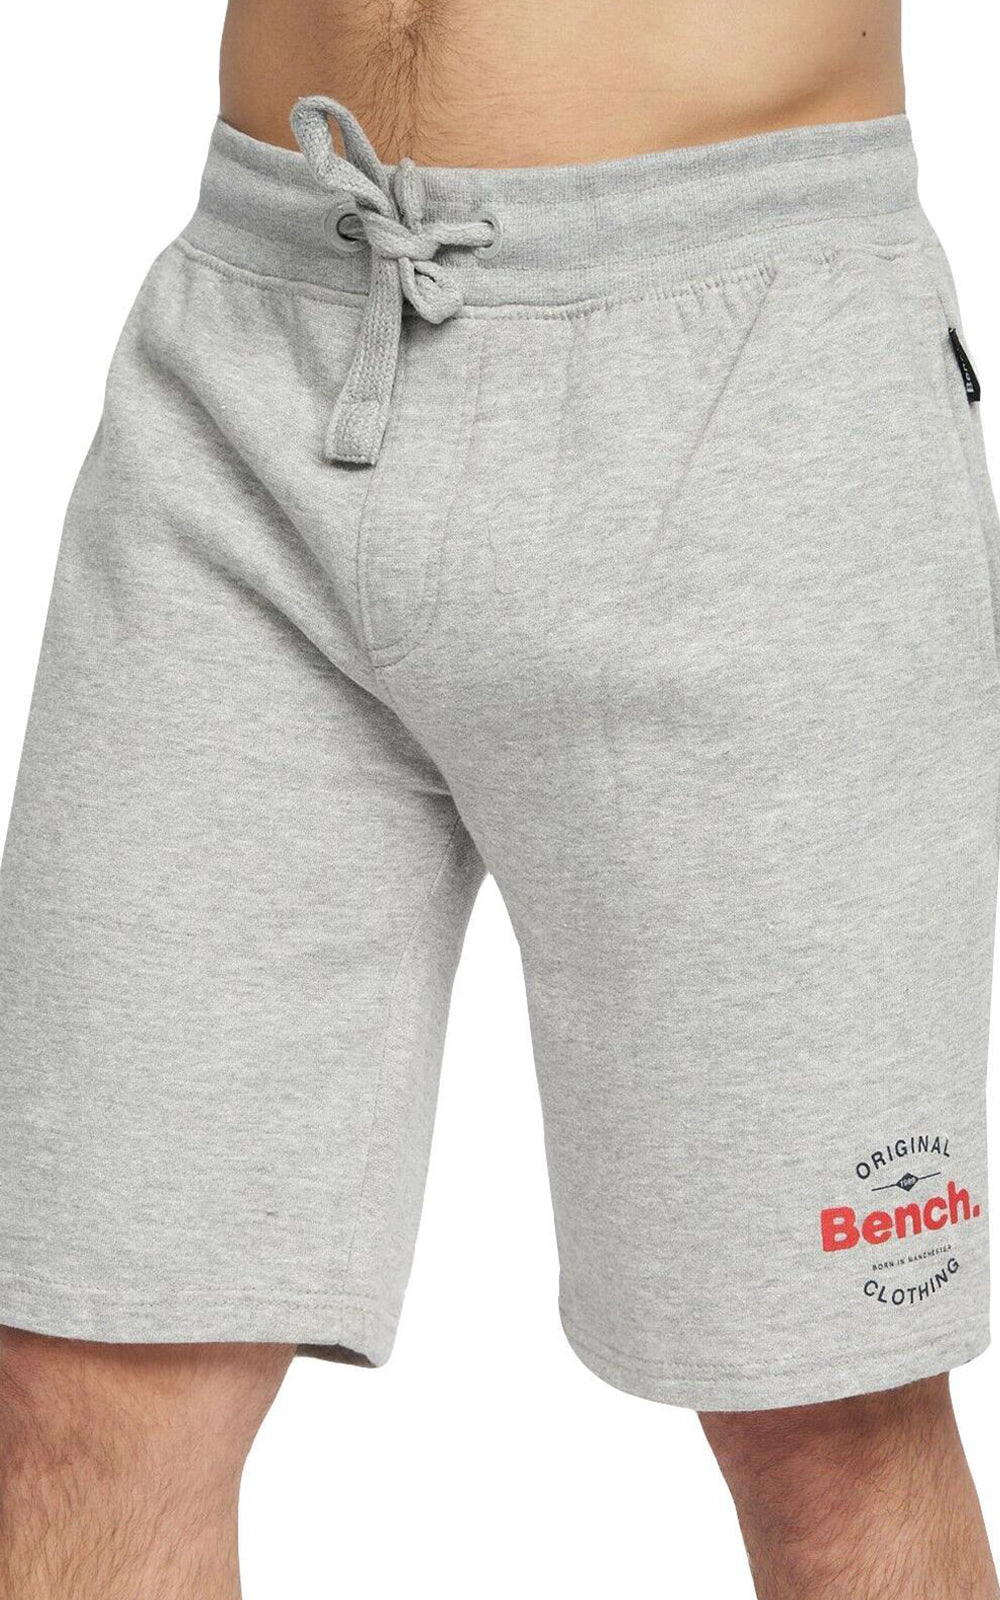 Bench Lockter Shorts